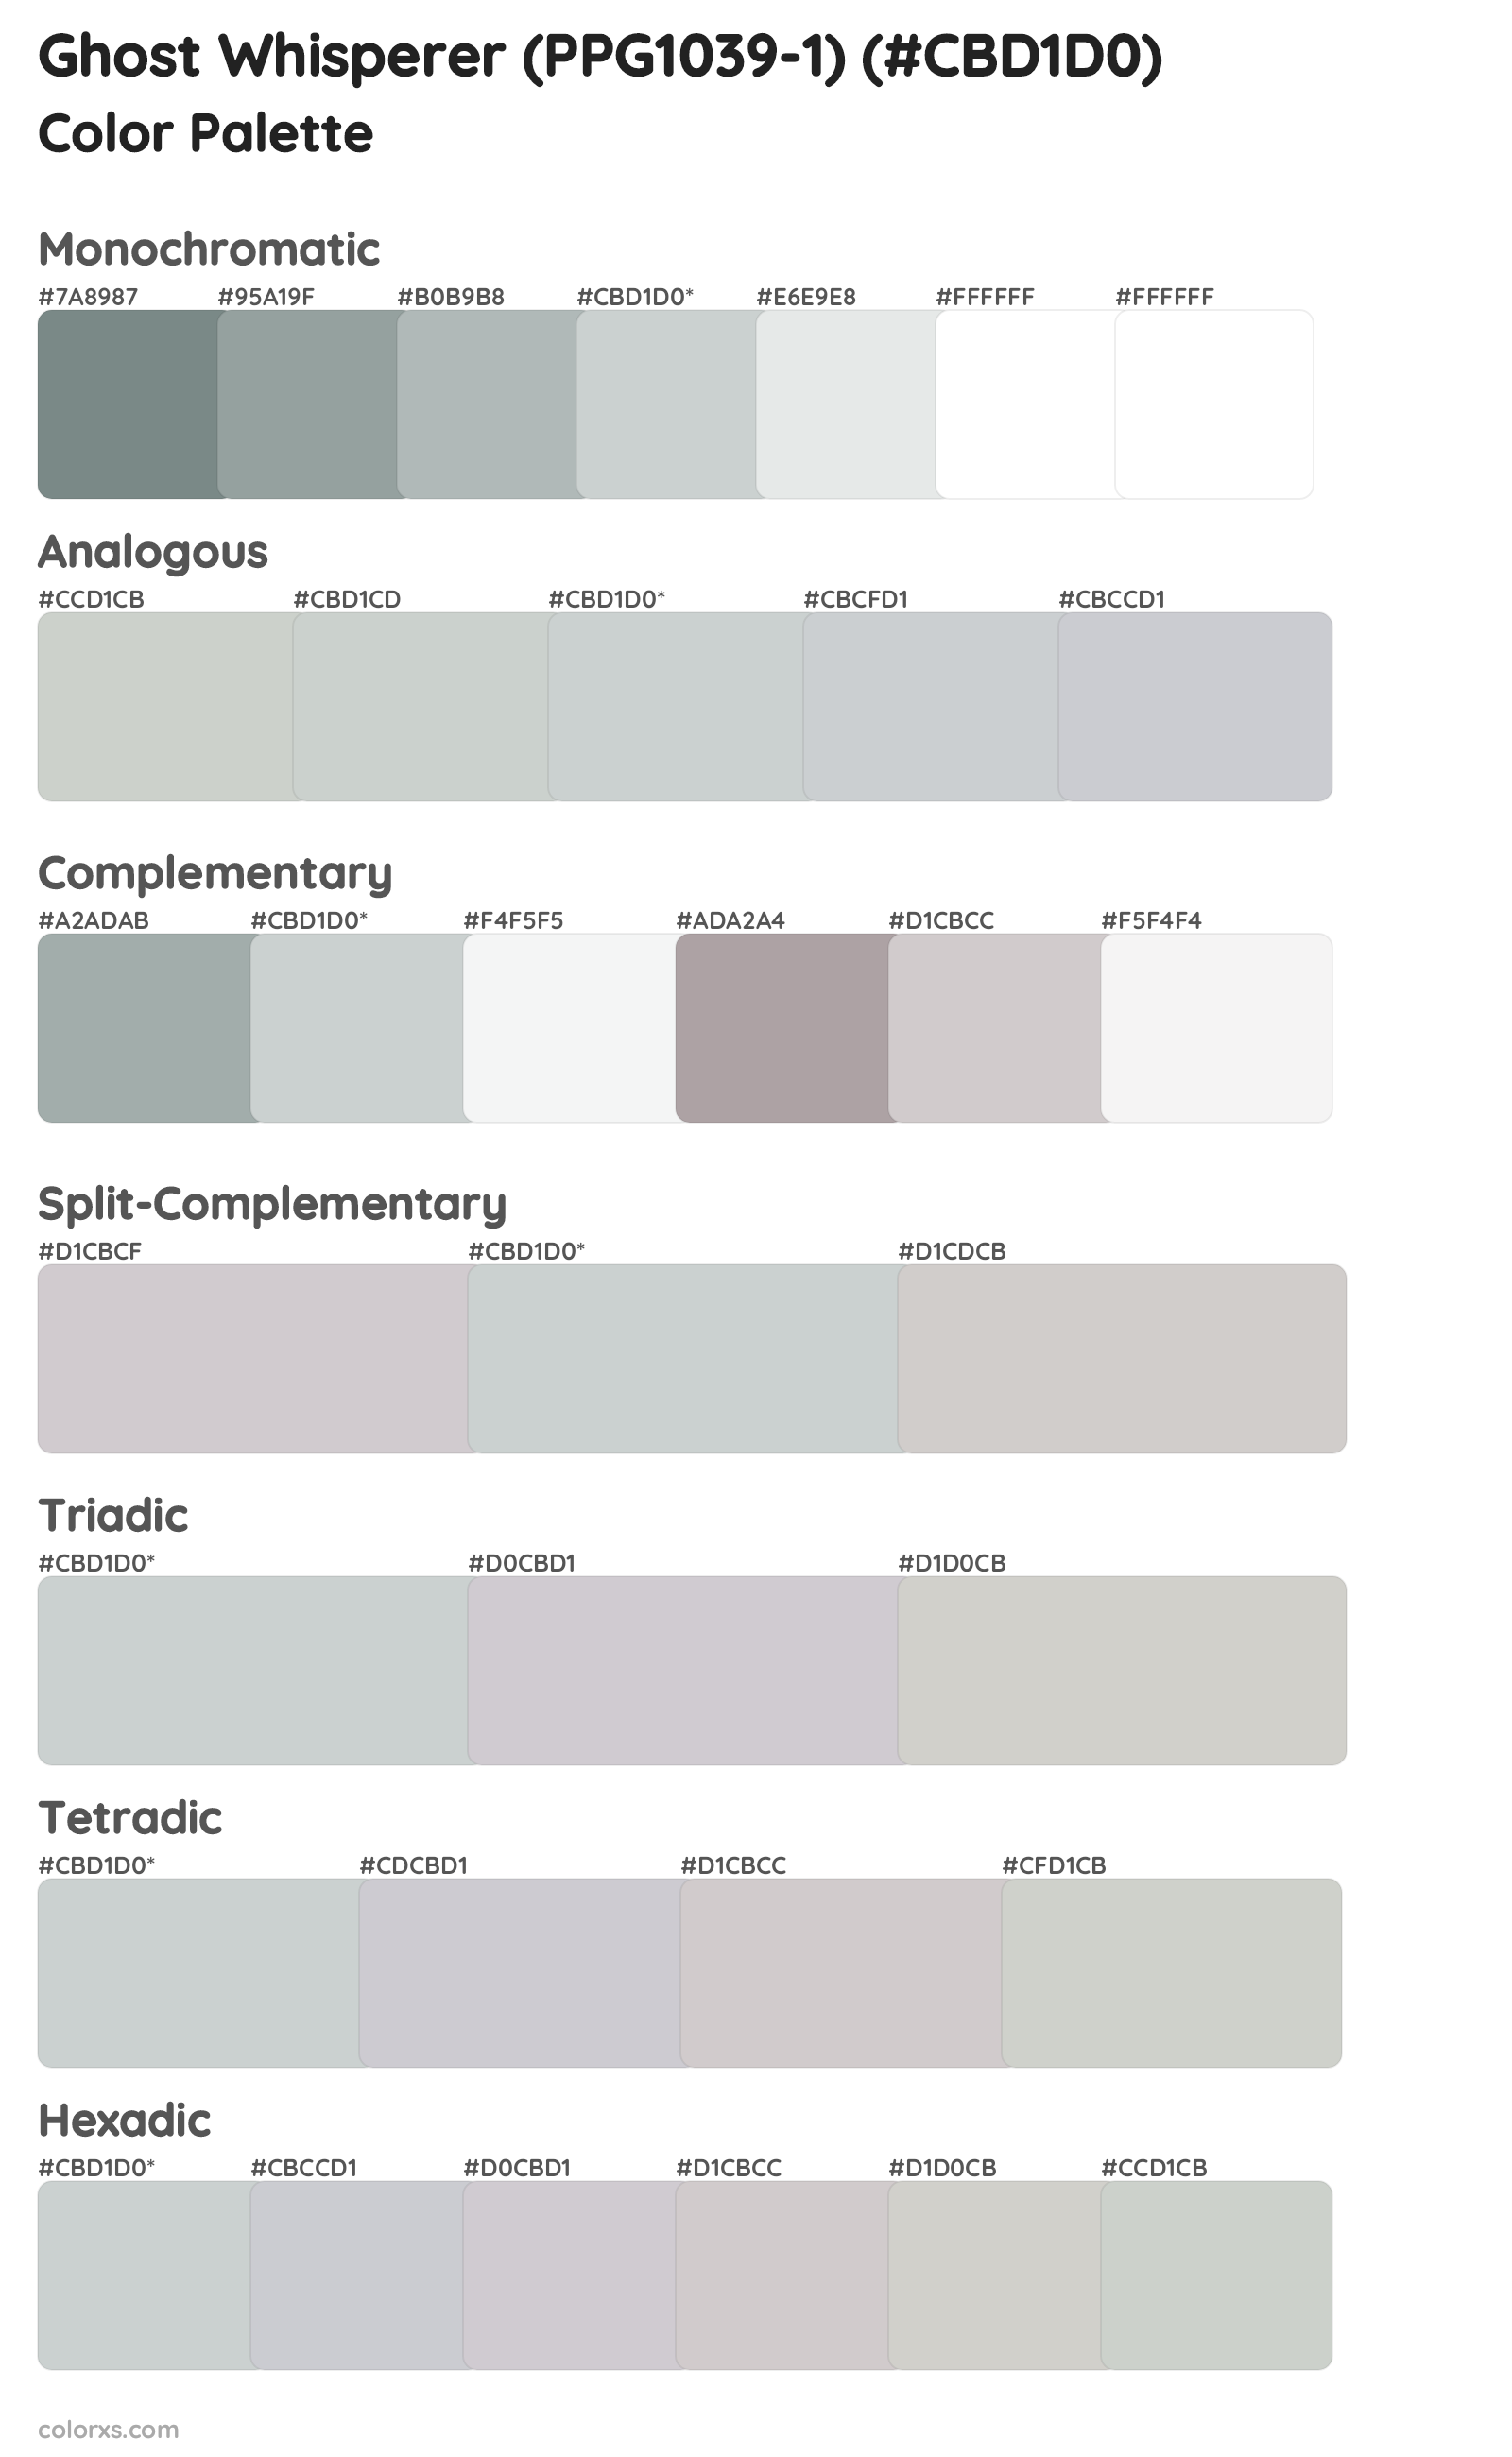 Ghost Whisperer (PPG1039-1) Color Scheme Palettes